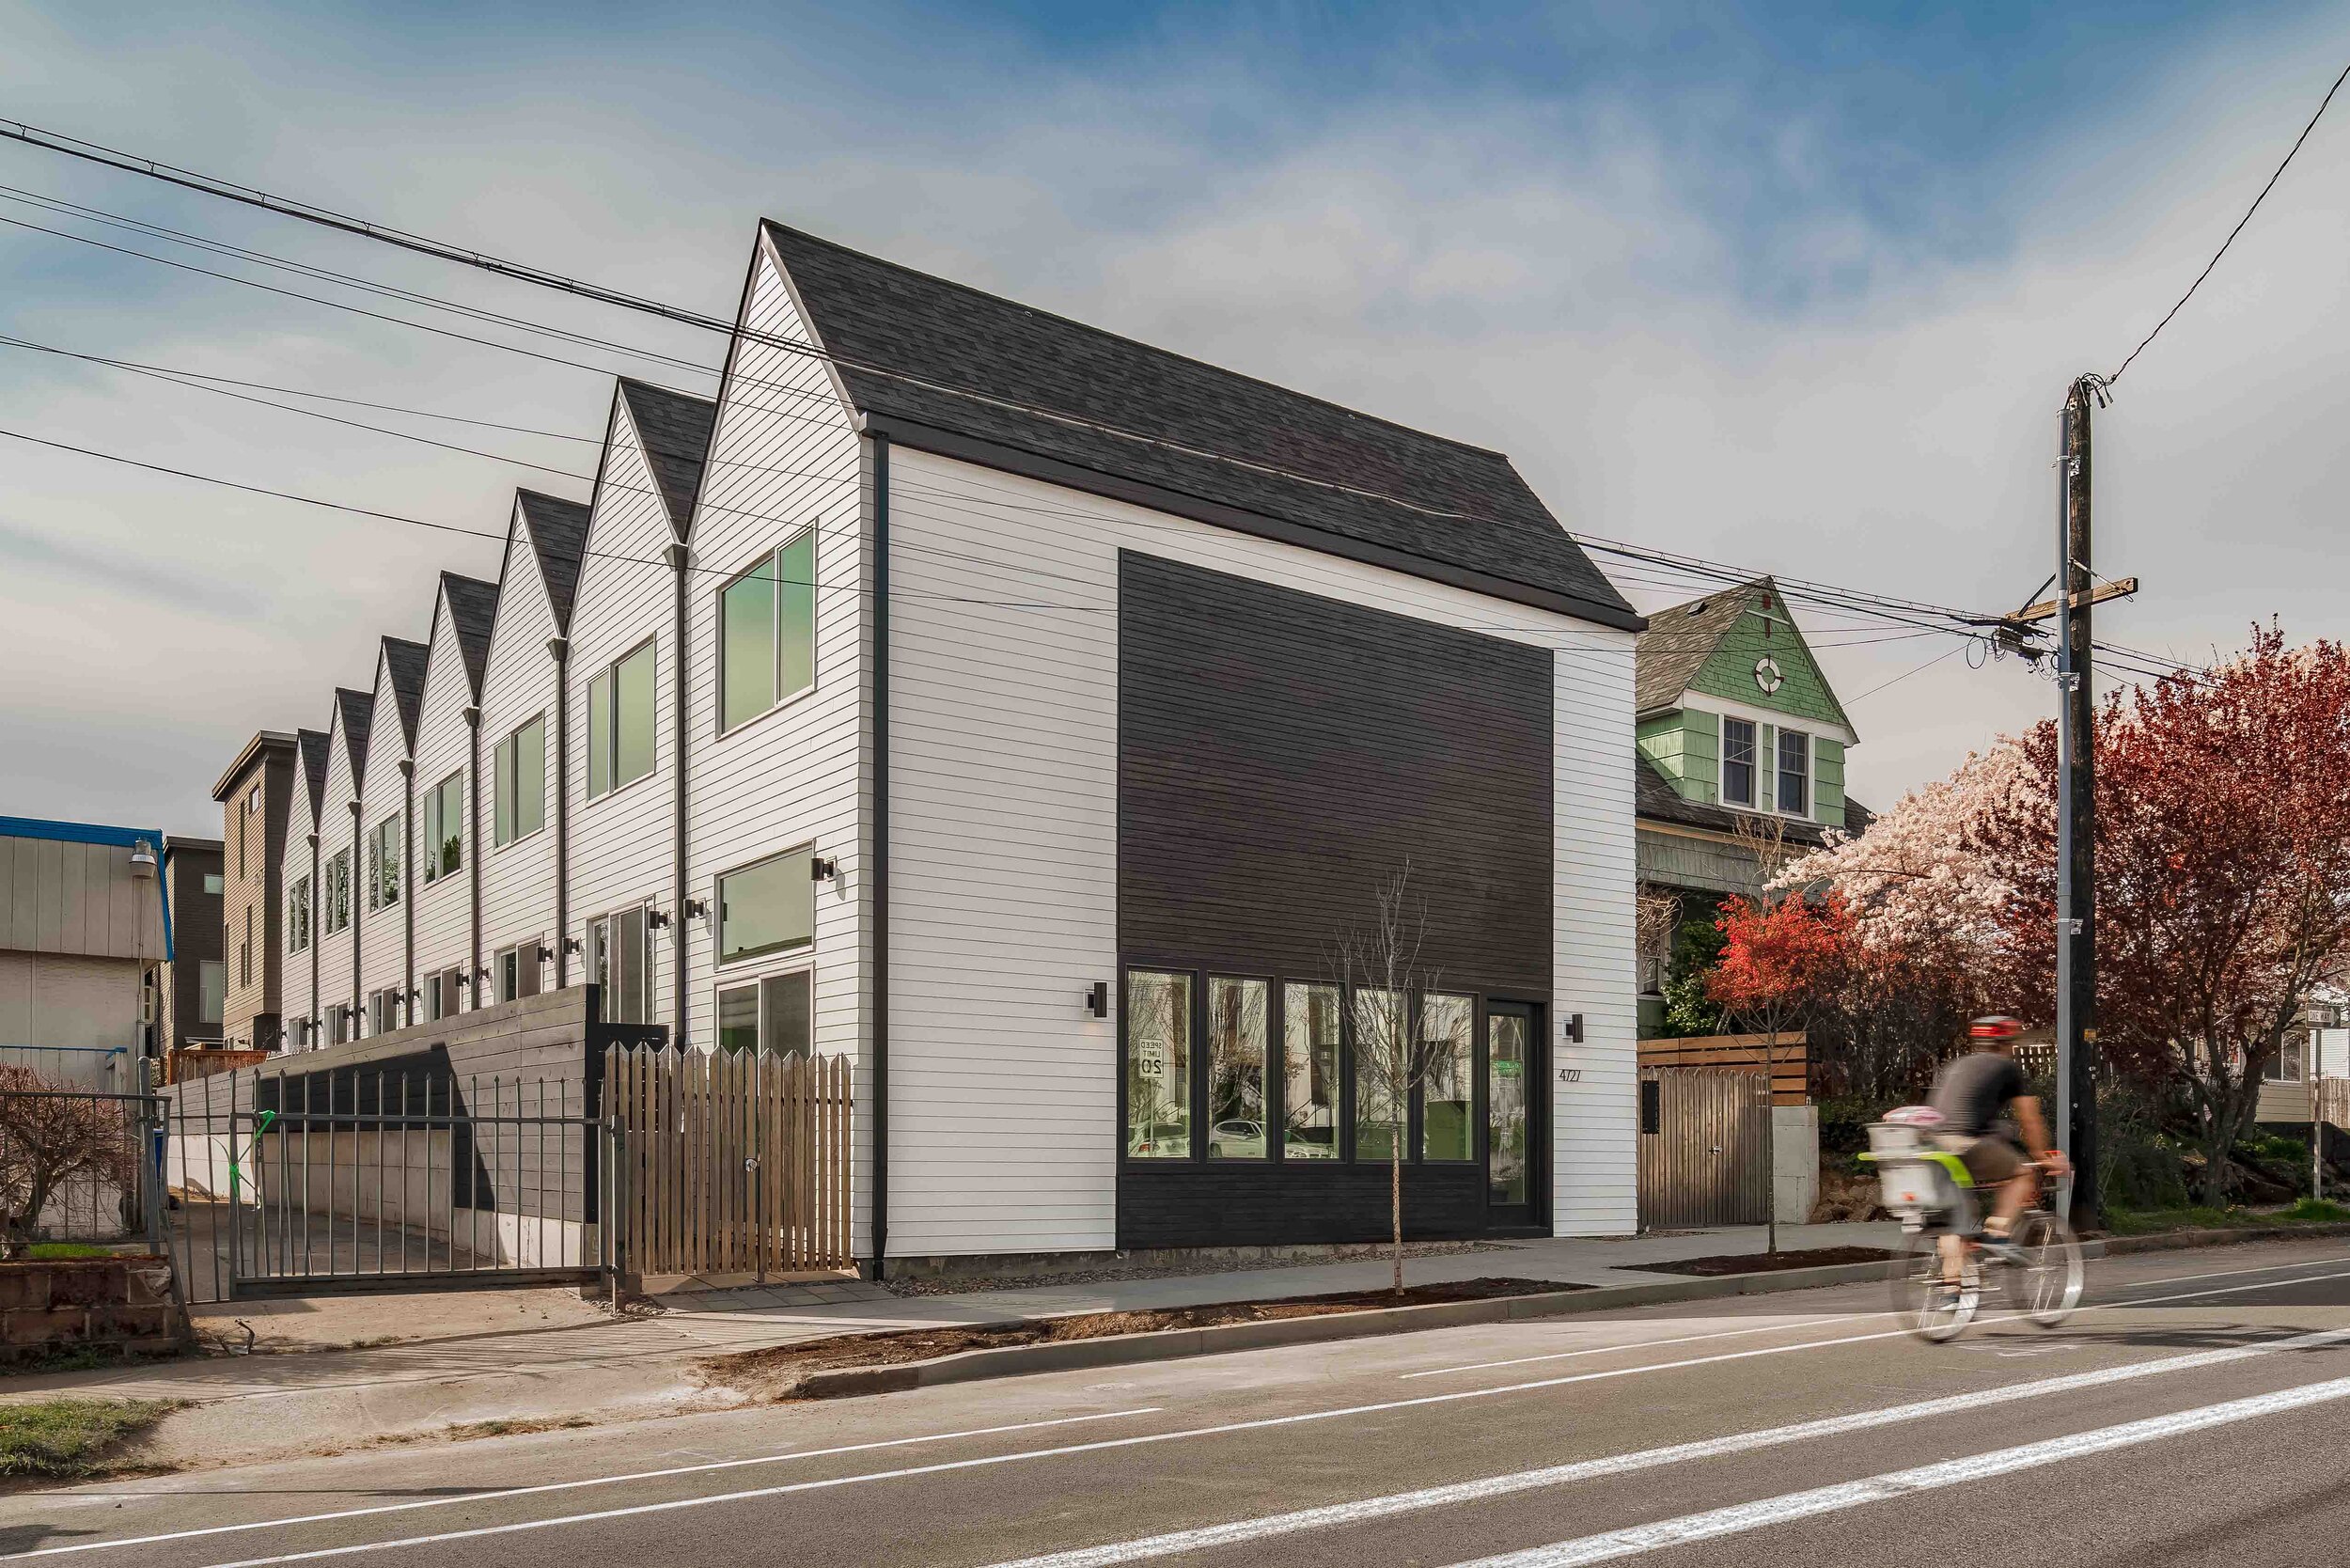  A custom designed townhouse multi-family community located on Williams Avenue. Design by architect Propel Studio. 